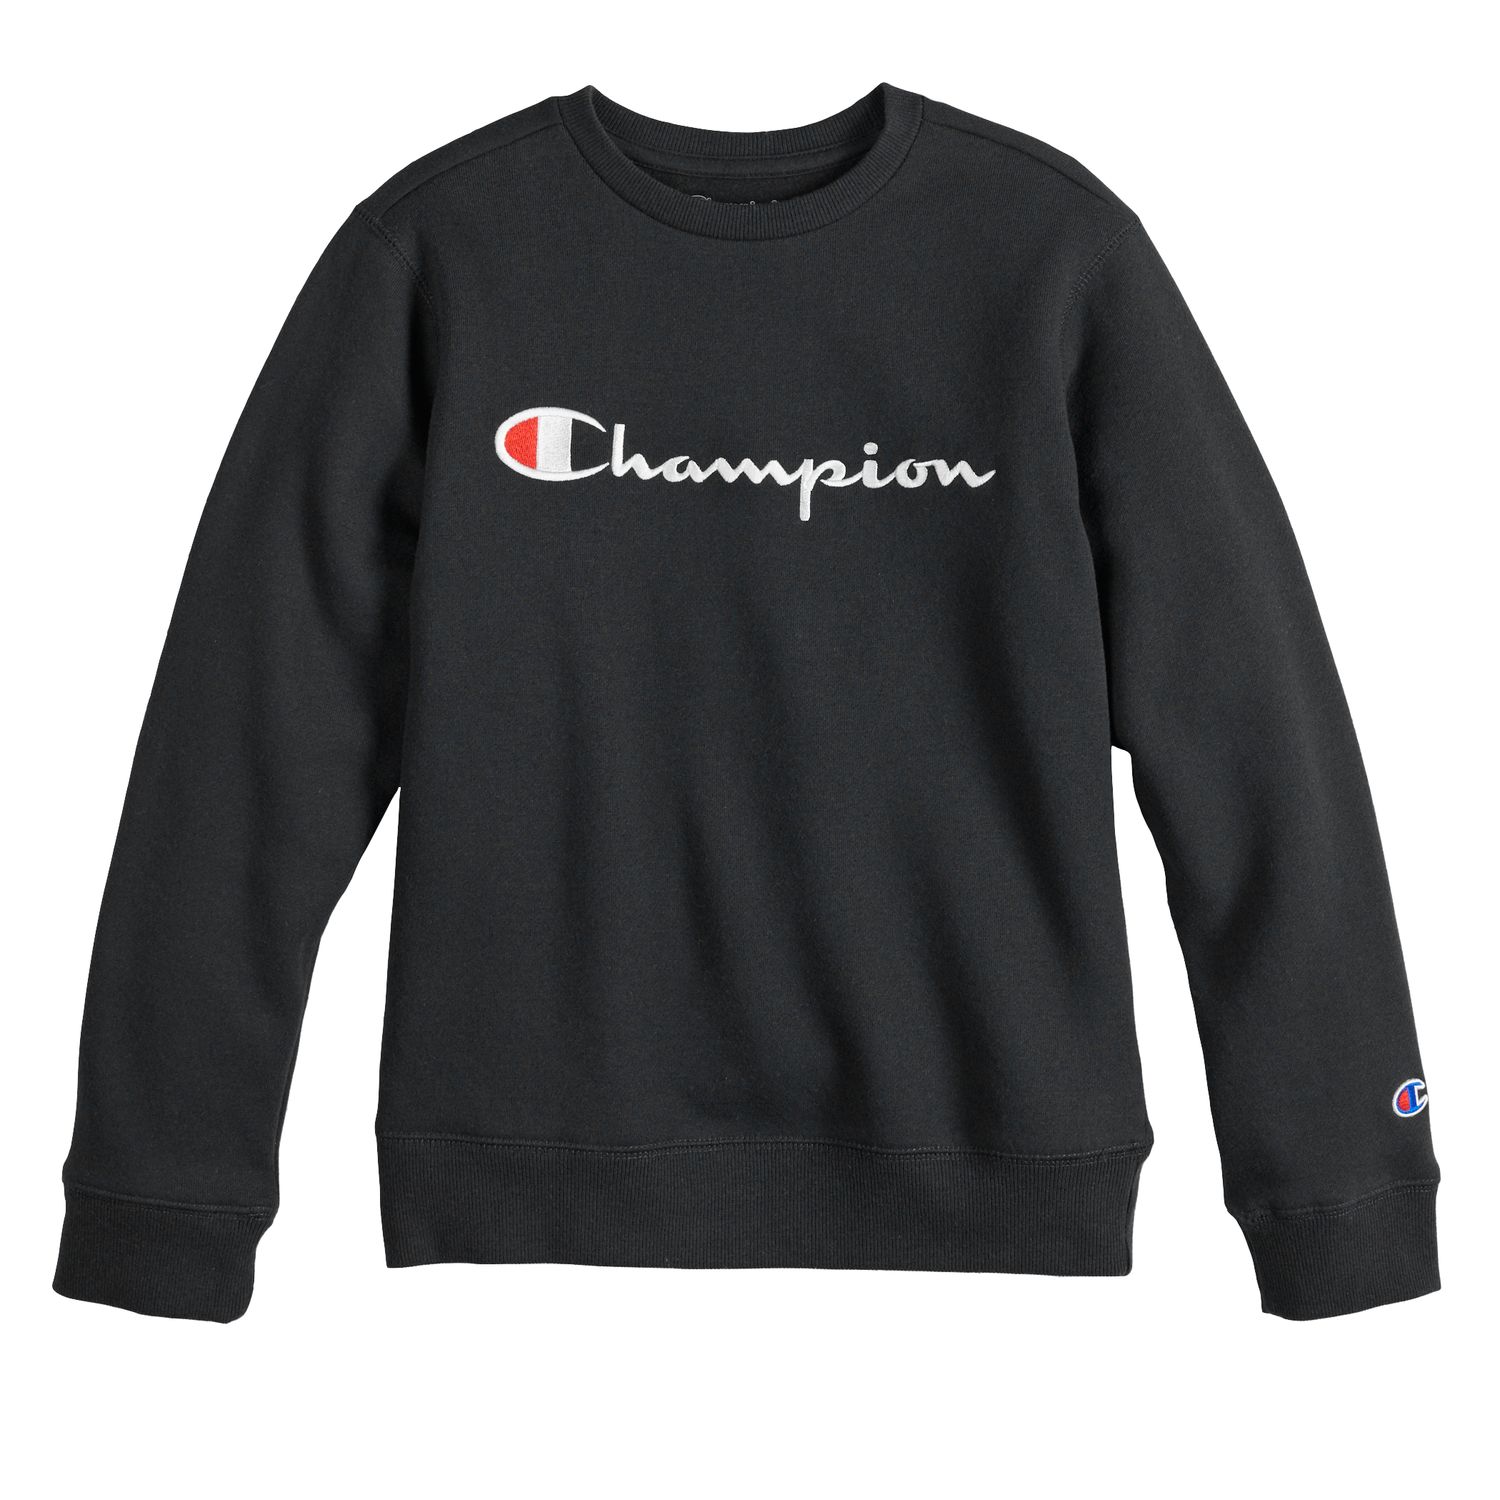 champion sweatshirt logo on sleeve